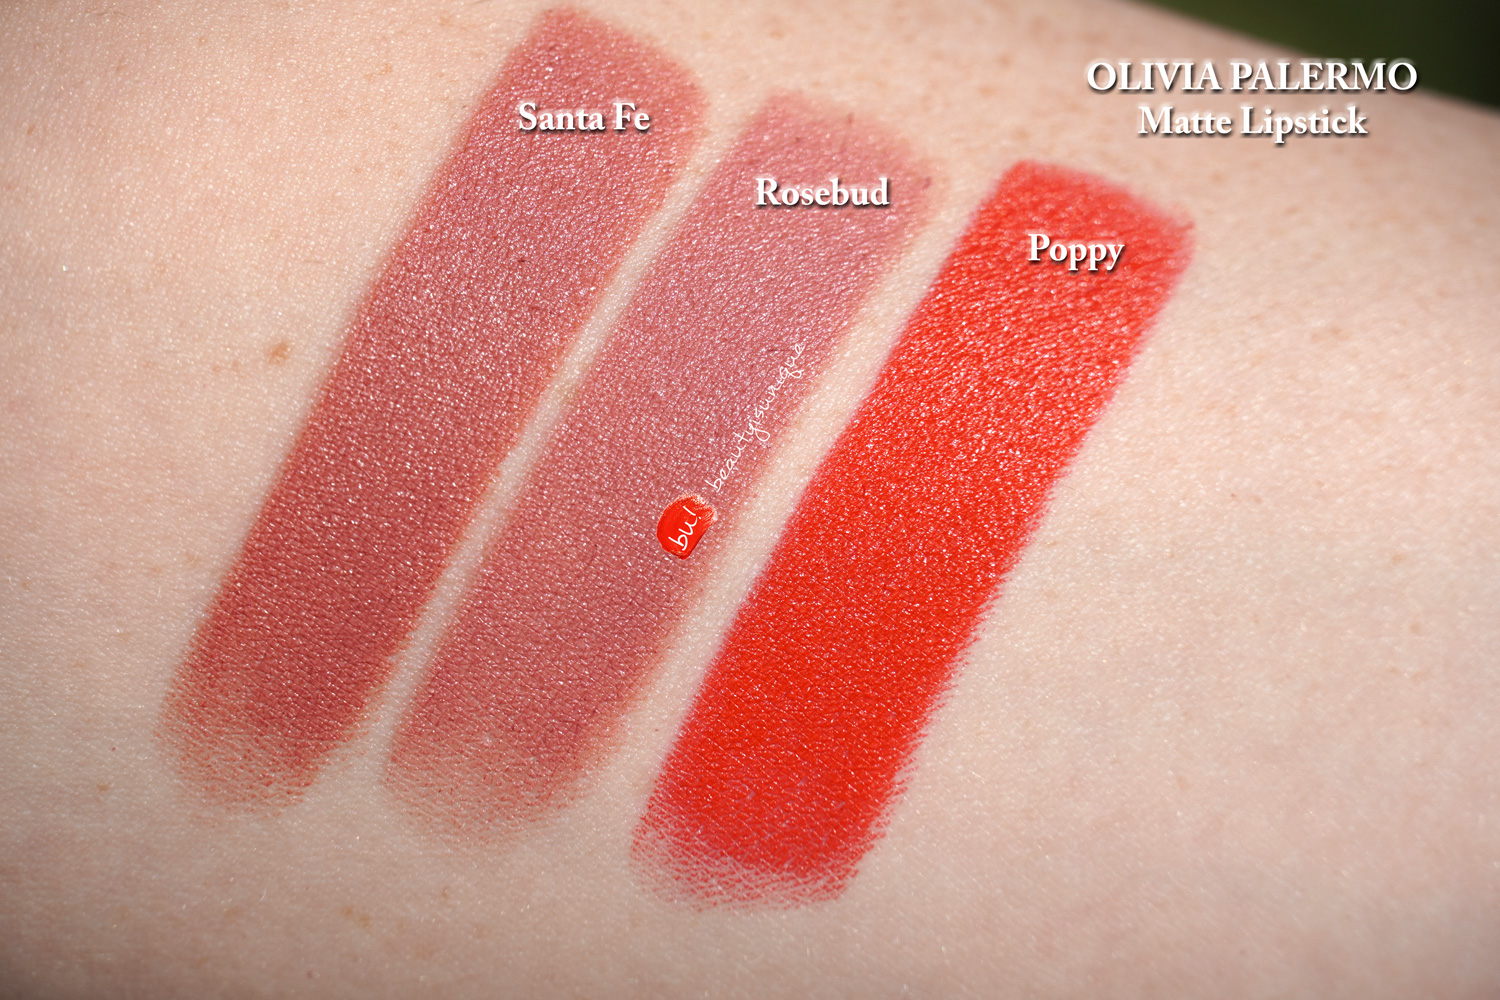 Olivia-palermo-matte-lipstick-swatches